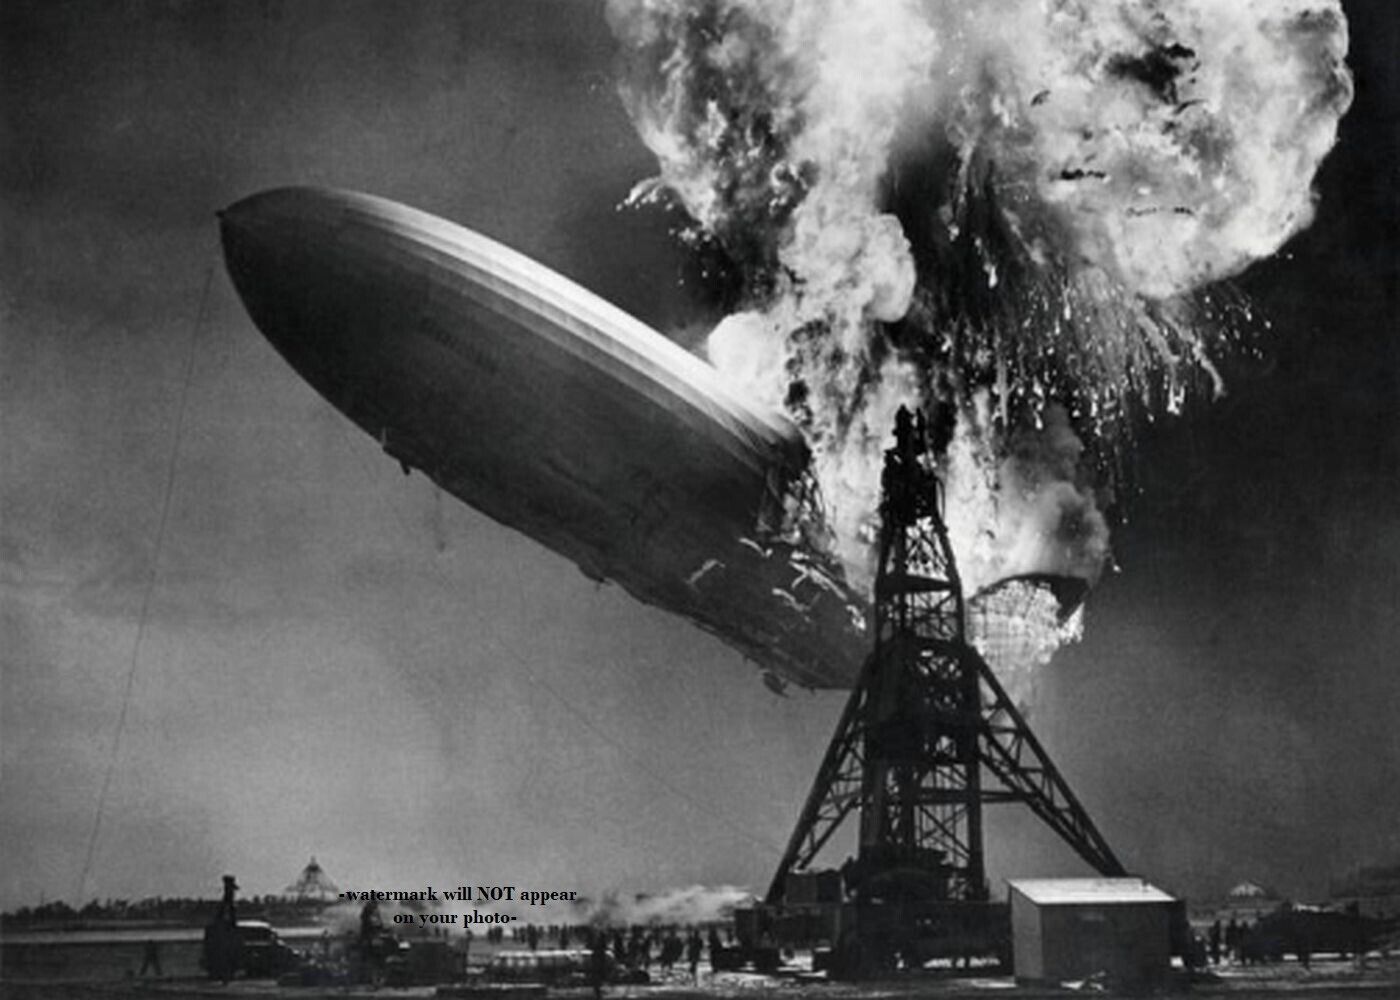 1937 Hindenburg Disaster PHOTO, airship, zeppelin, Lakehurst, NJ, Germany German